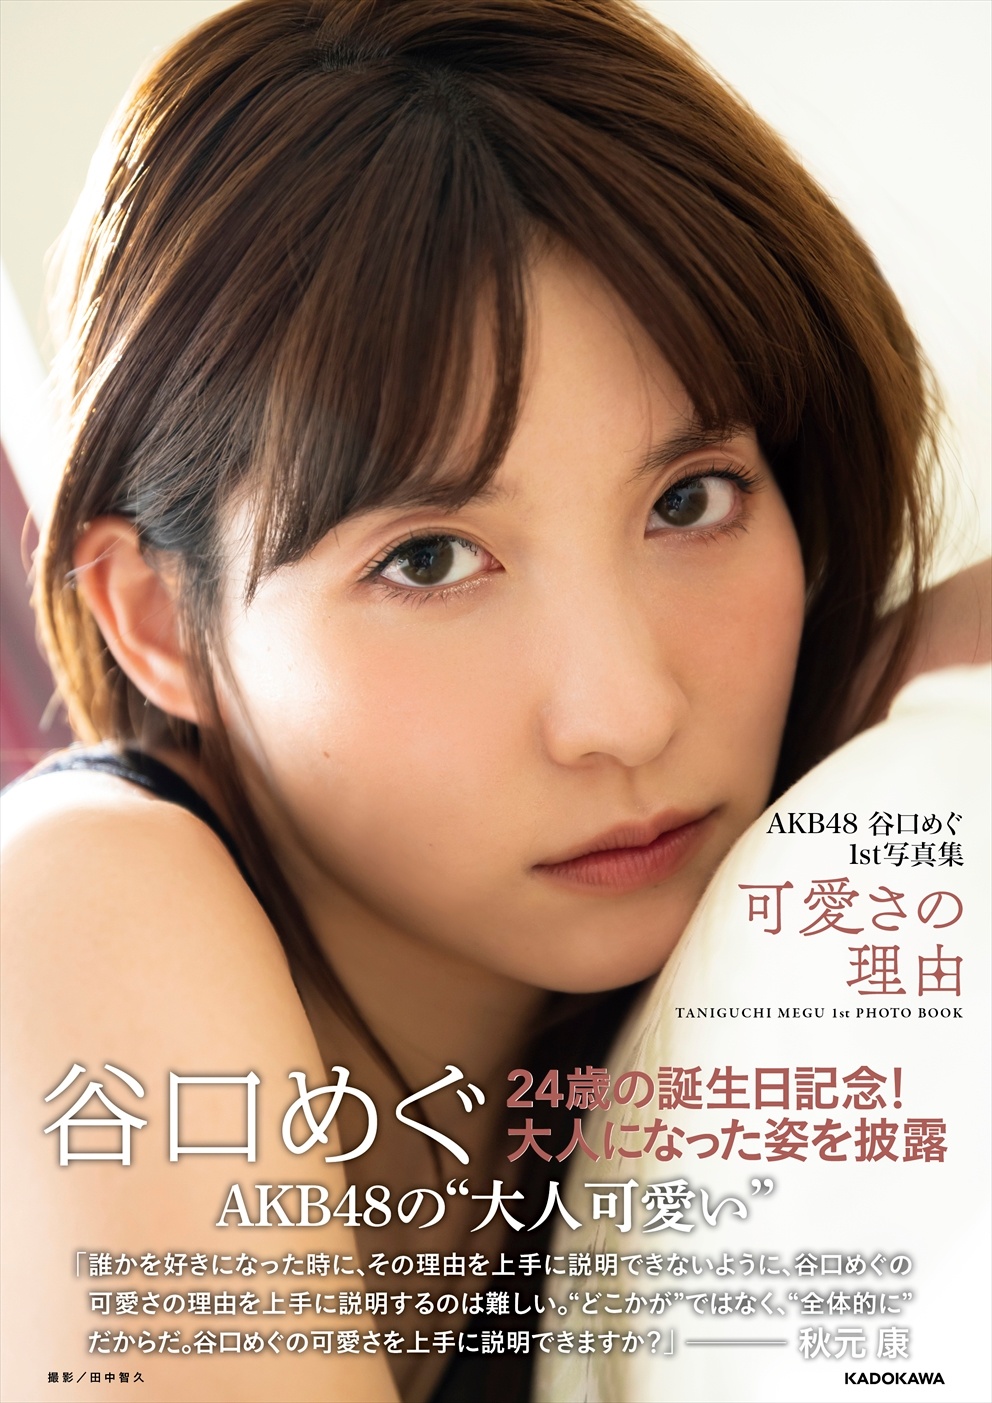 AKB48谷口めぐ首本写真集『可爱さの理由』11月发售性感照片抢先看 - itotii